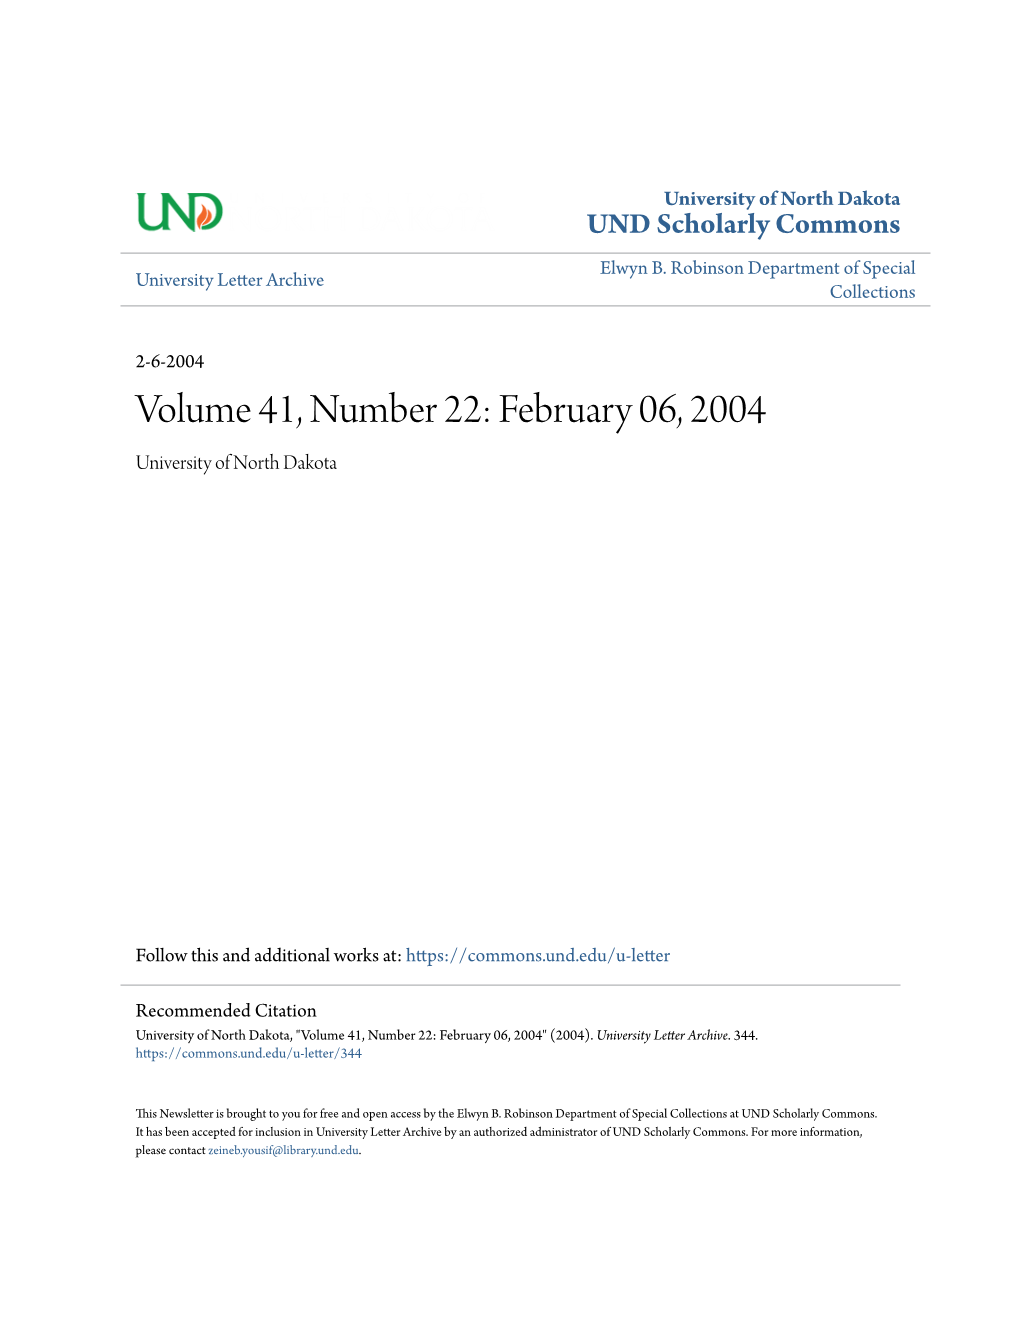 Volume 41, Number 22: February 06, 2004 University of North Dakota